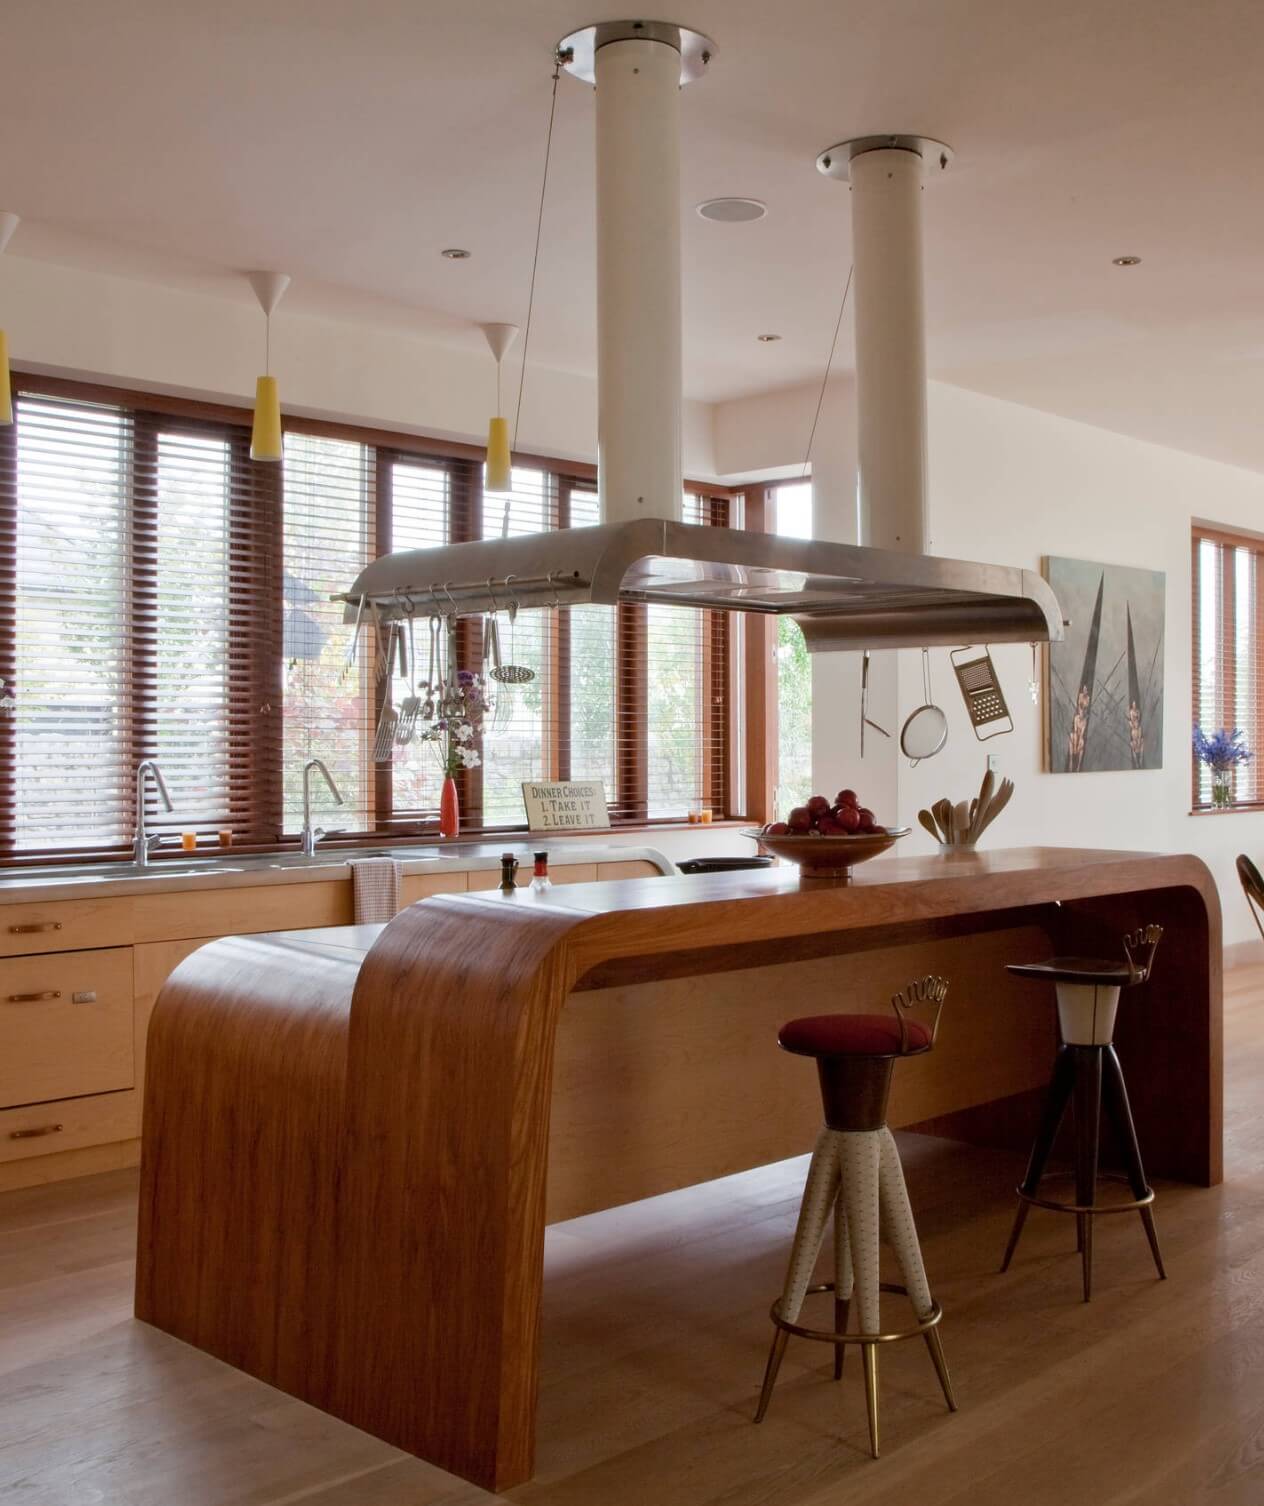 20 kitchen countertop ideas